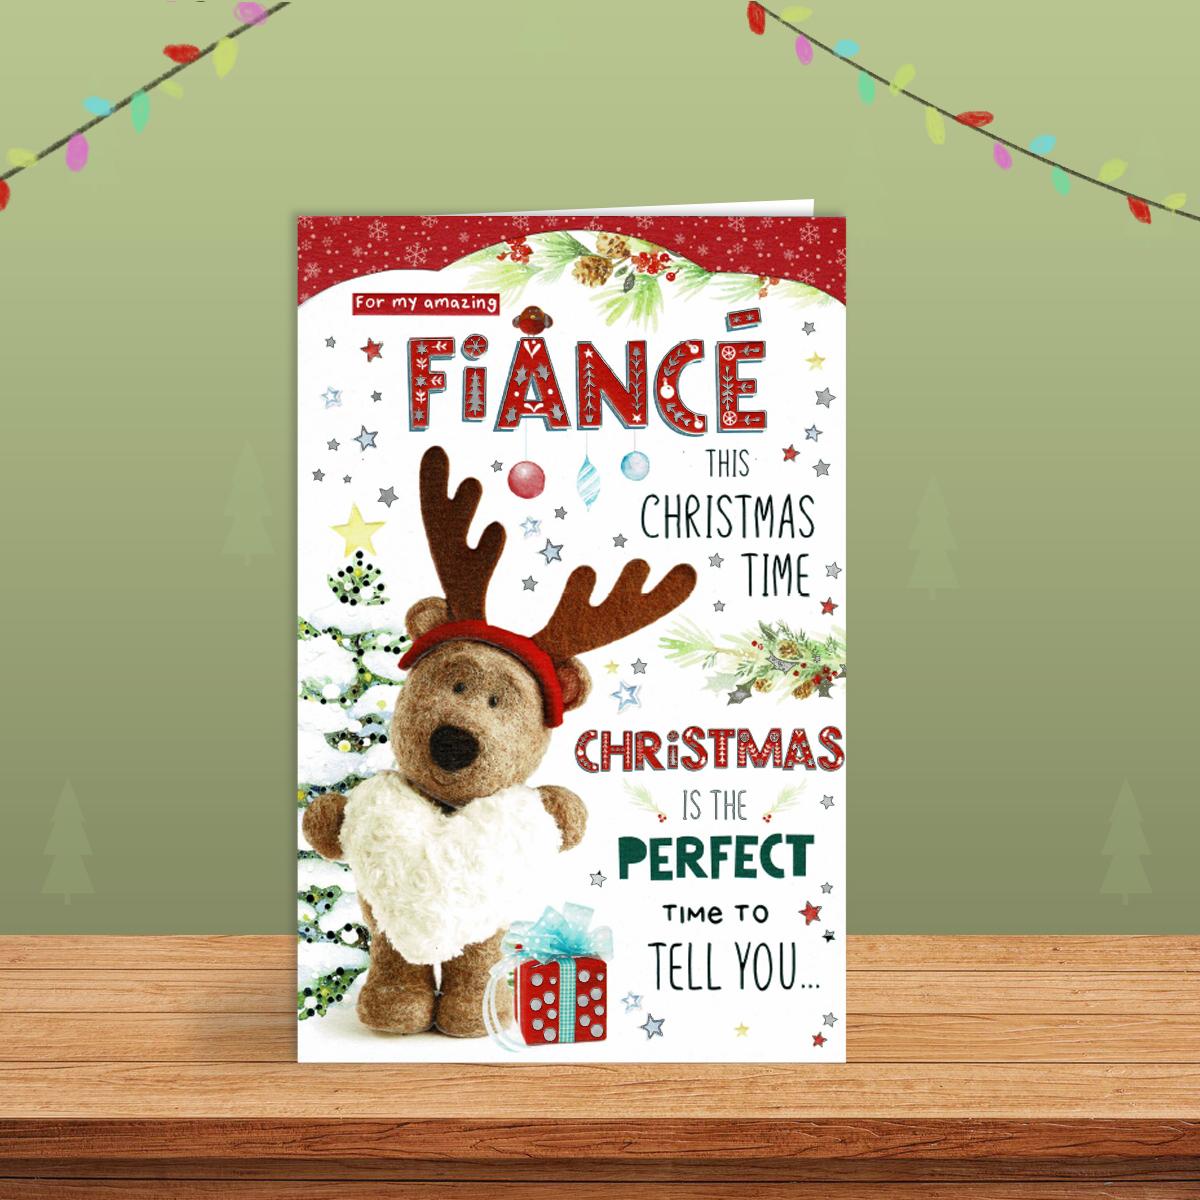 Fiance Christmas Card Alongside Its Red Envelope